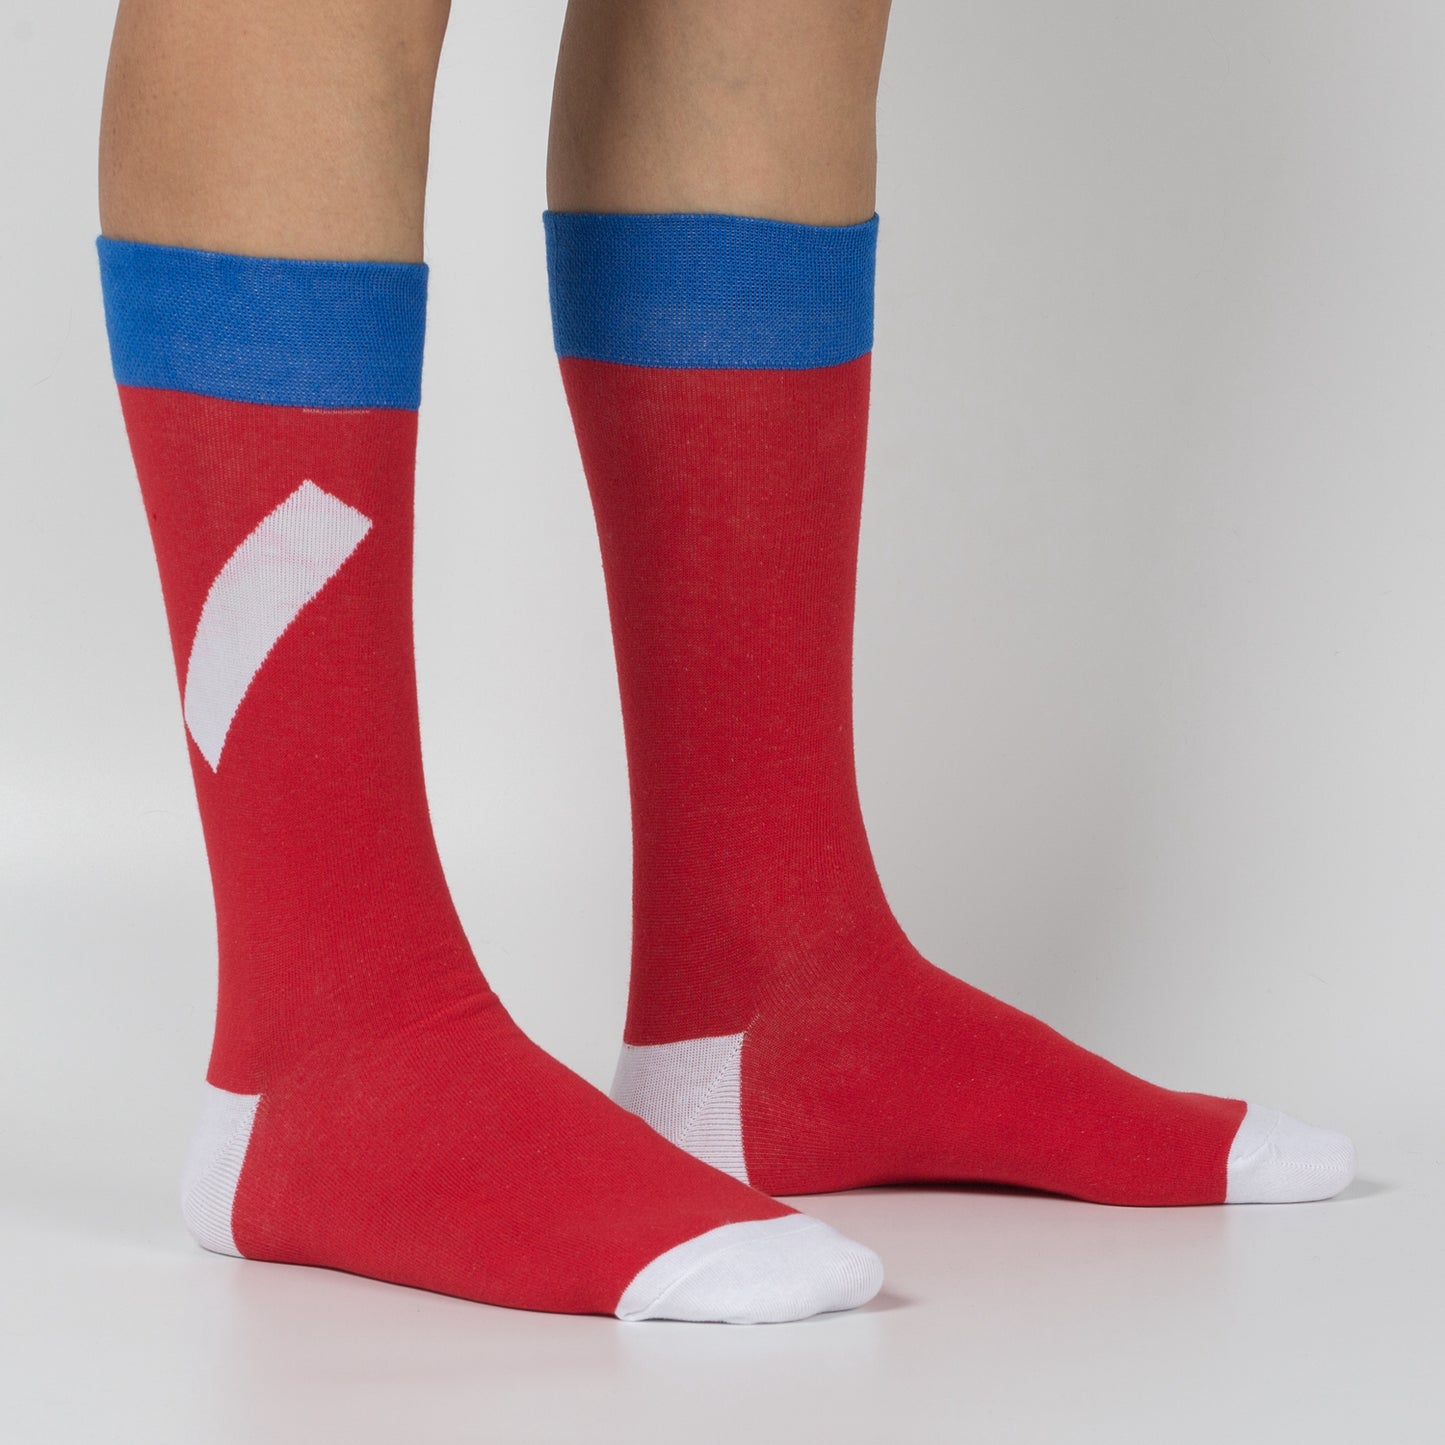 Cheveley Park Stud Socks - Socks - Hacked Up